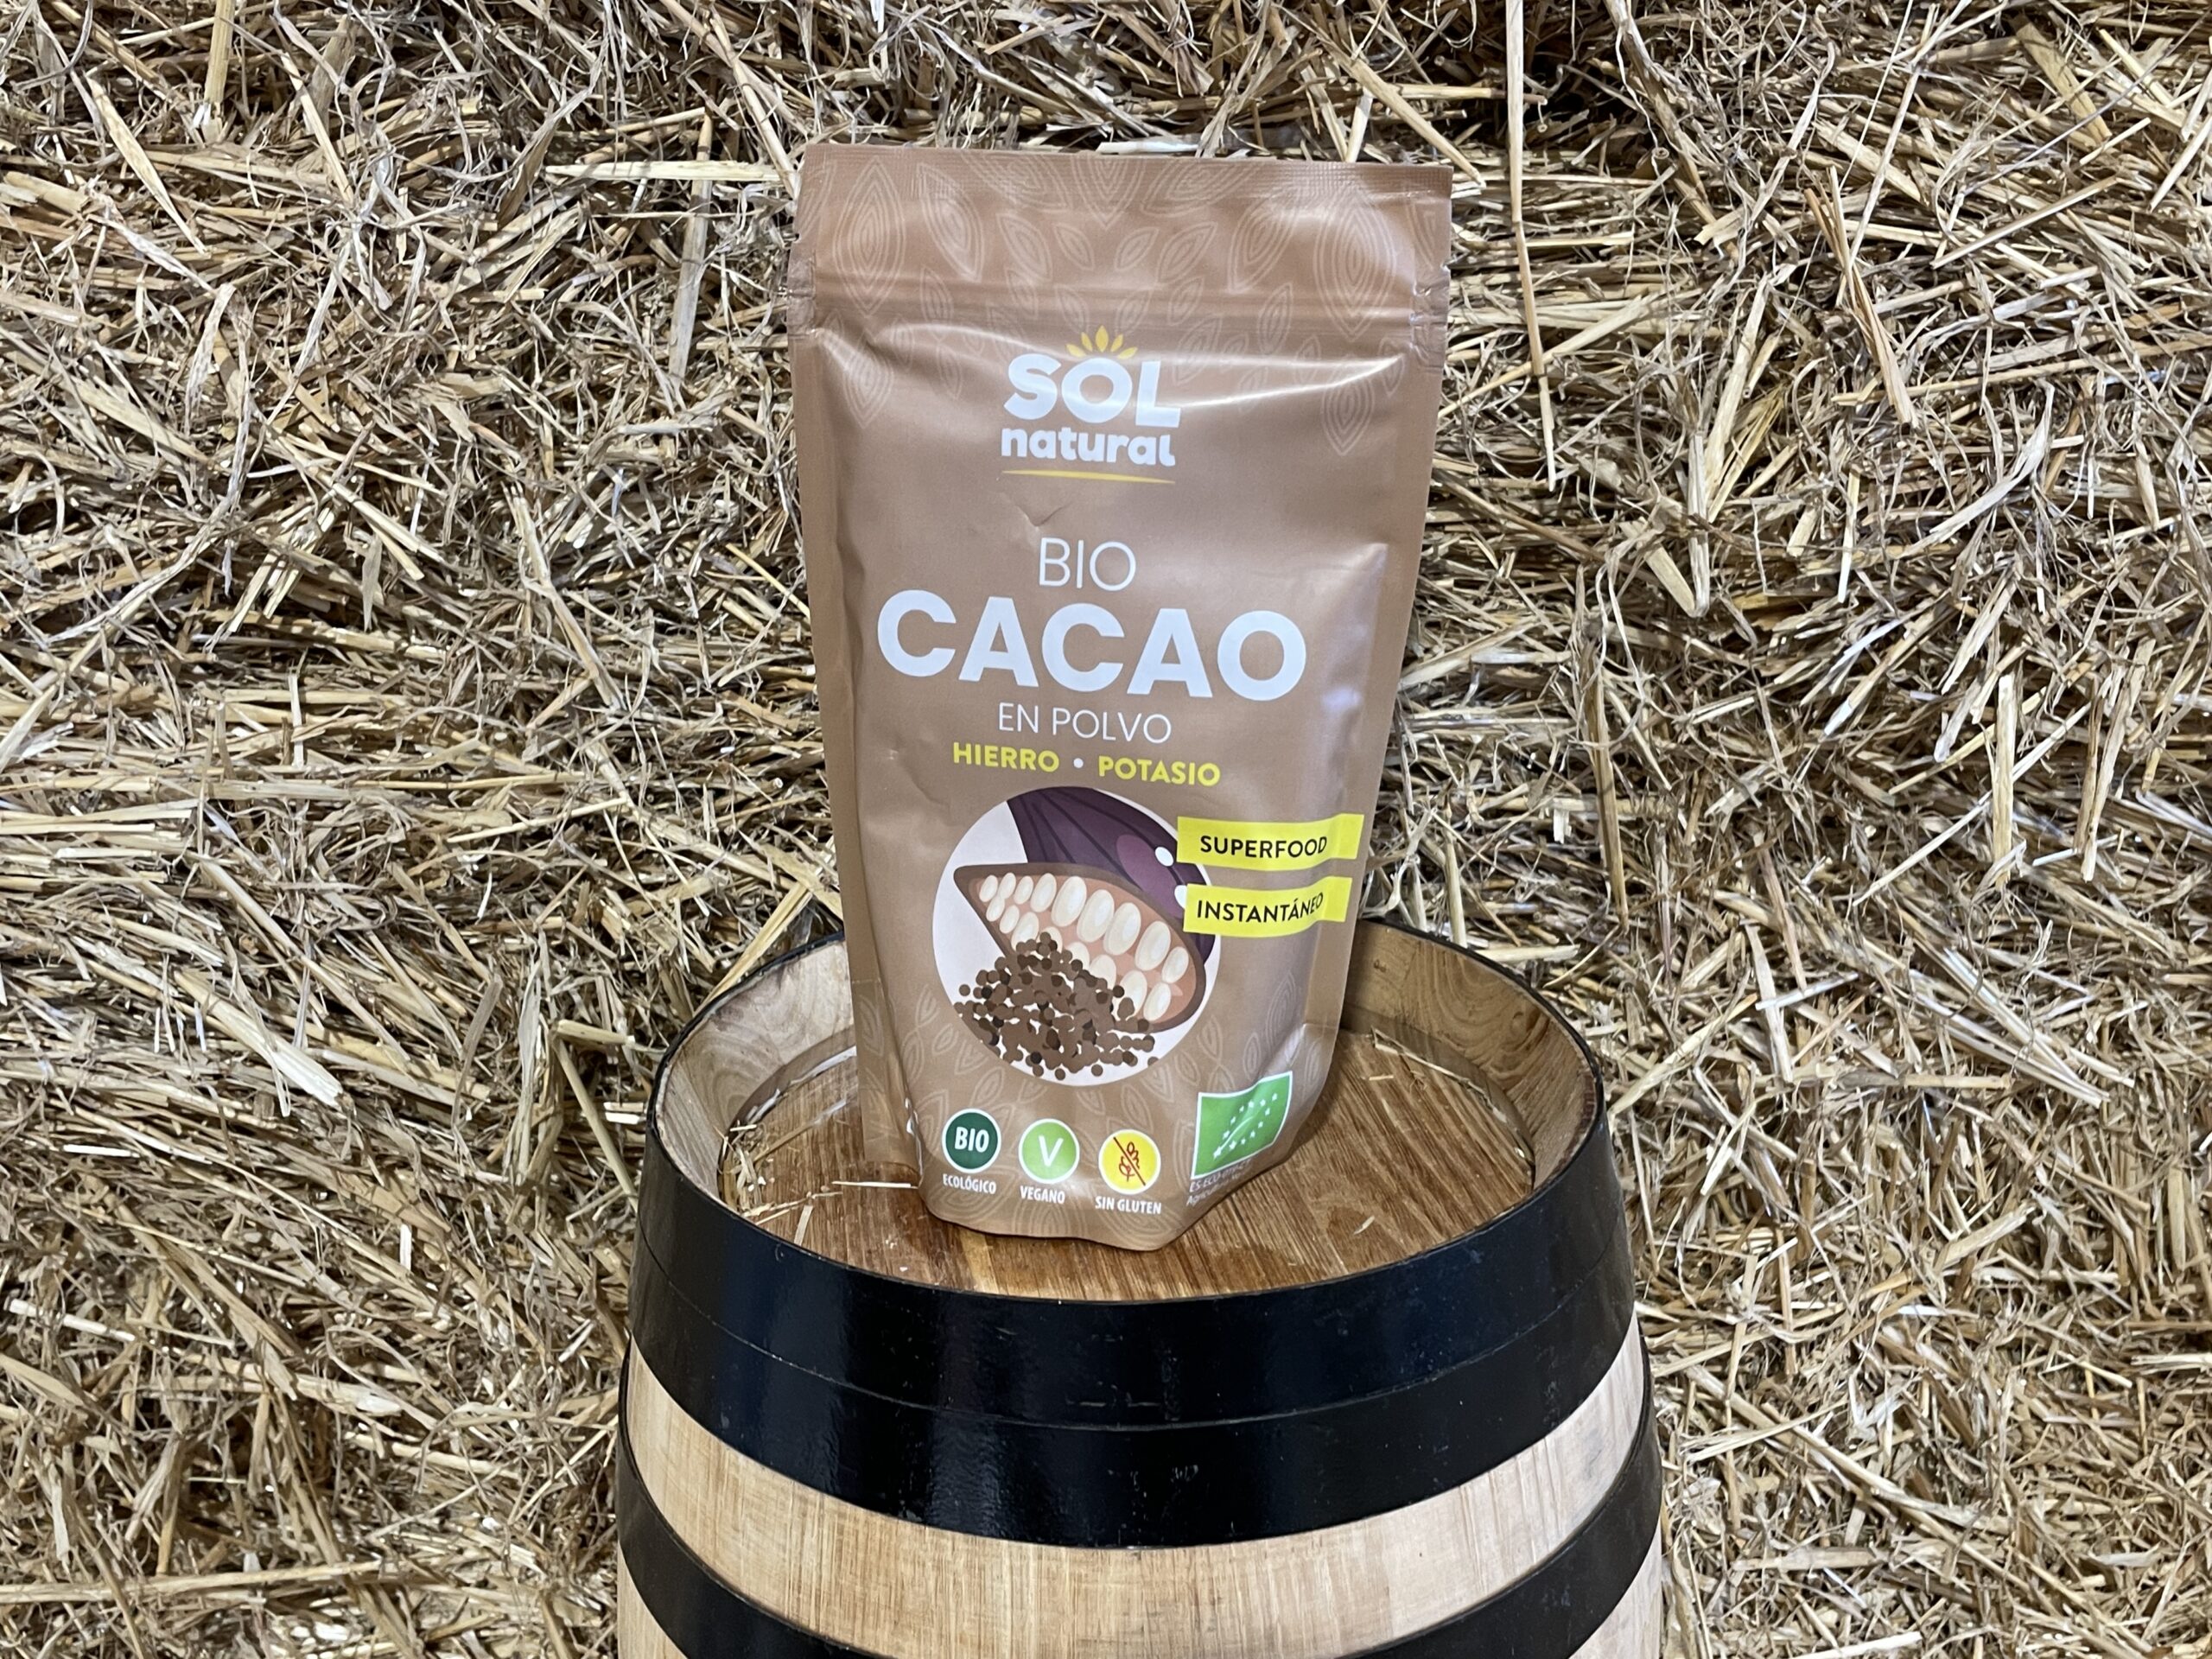 Curcuma Latte Mix Bio 200 Gr de Solnatural